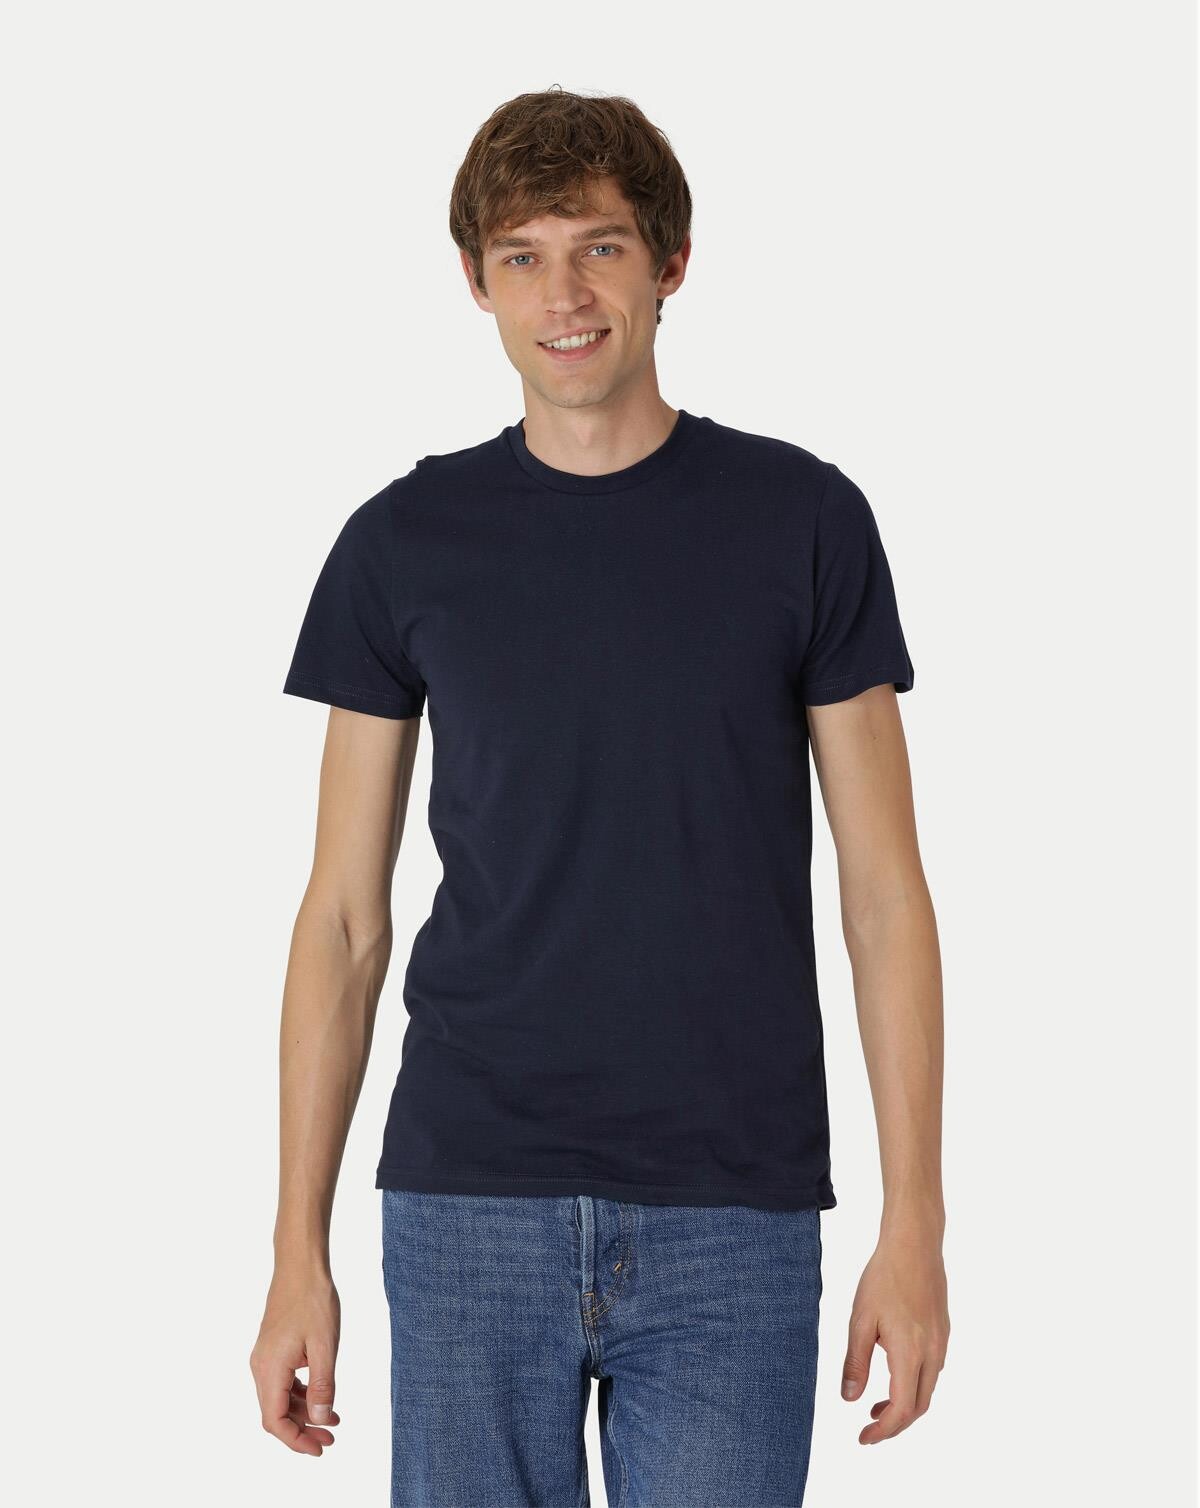 Neutral Økologisk T-shirt til - Tætsiddende (Navy, 2XL)